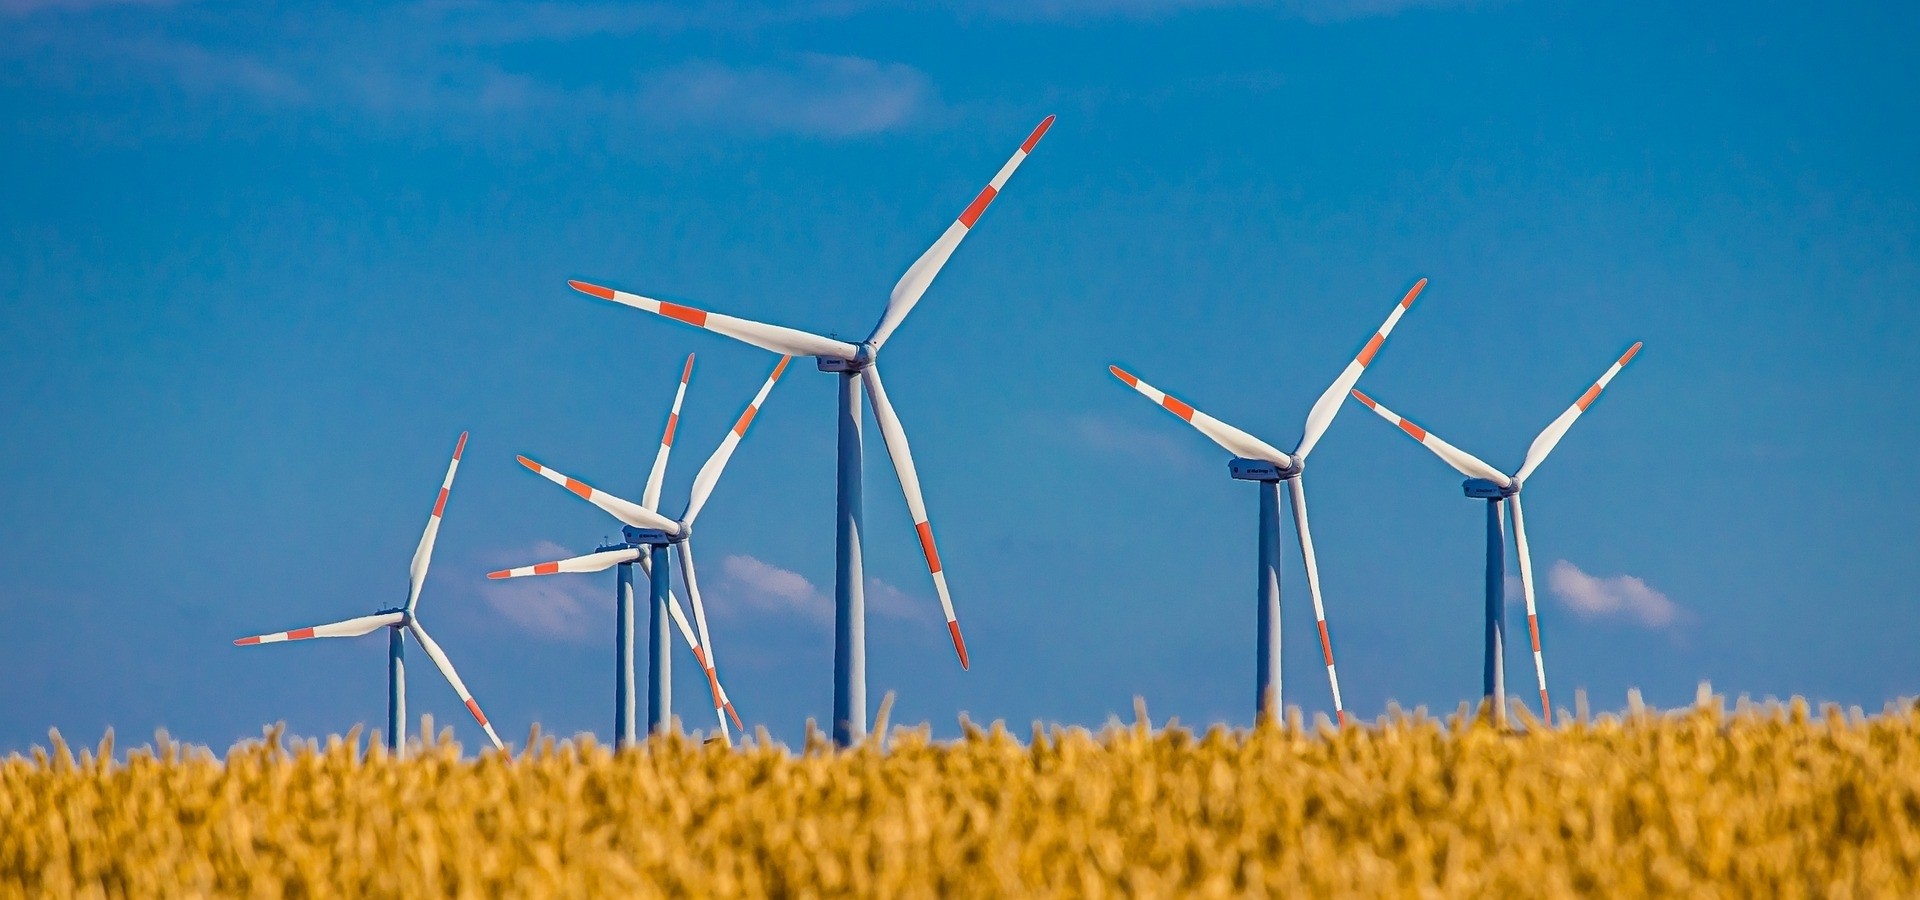 Windrad, Windkraft, Windenergie, Energie